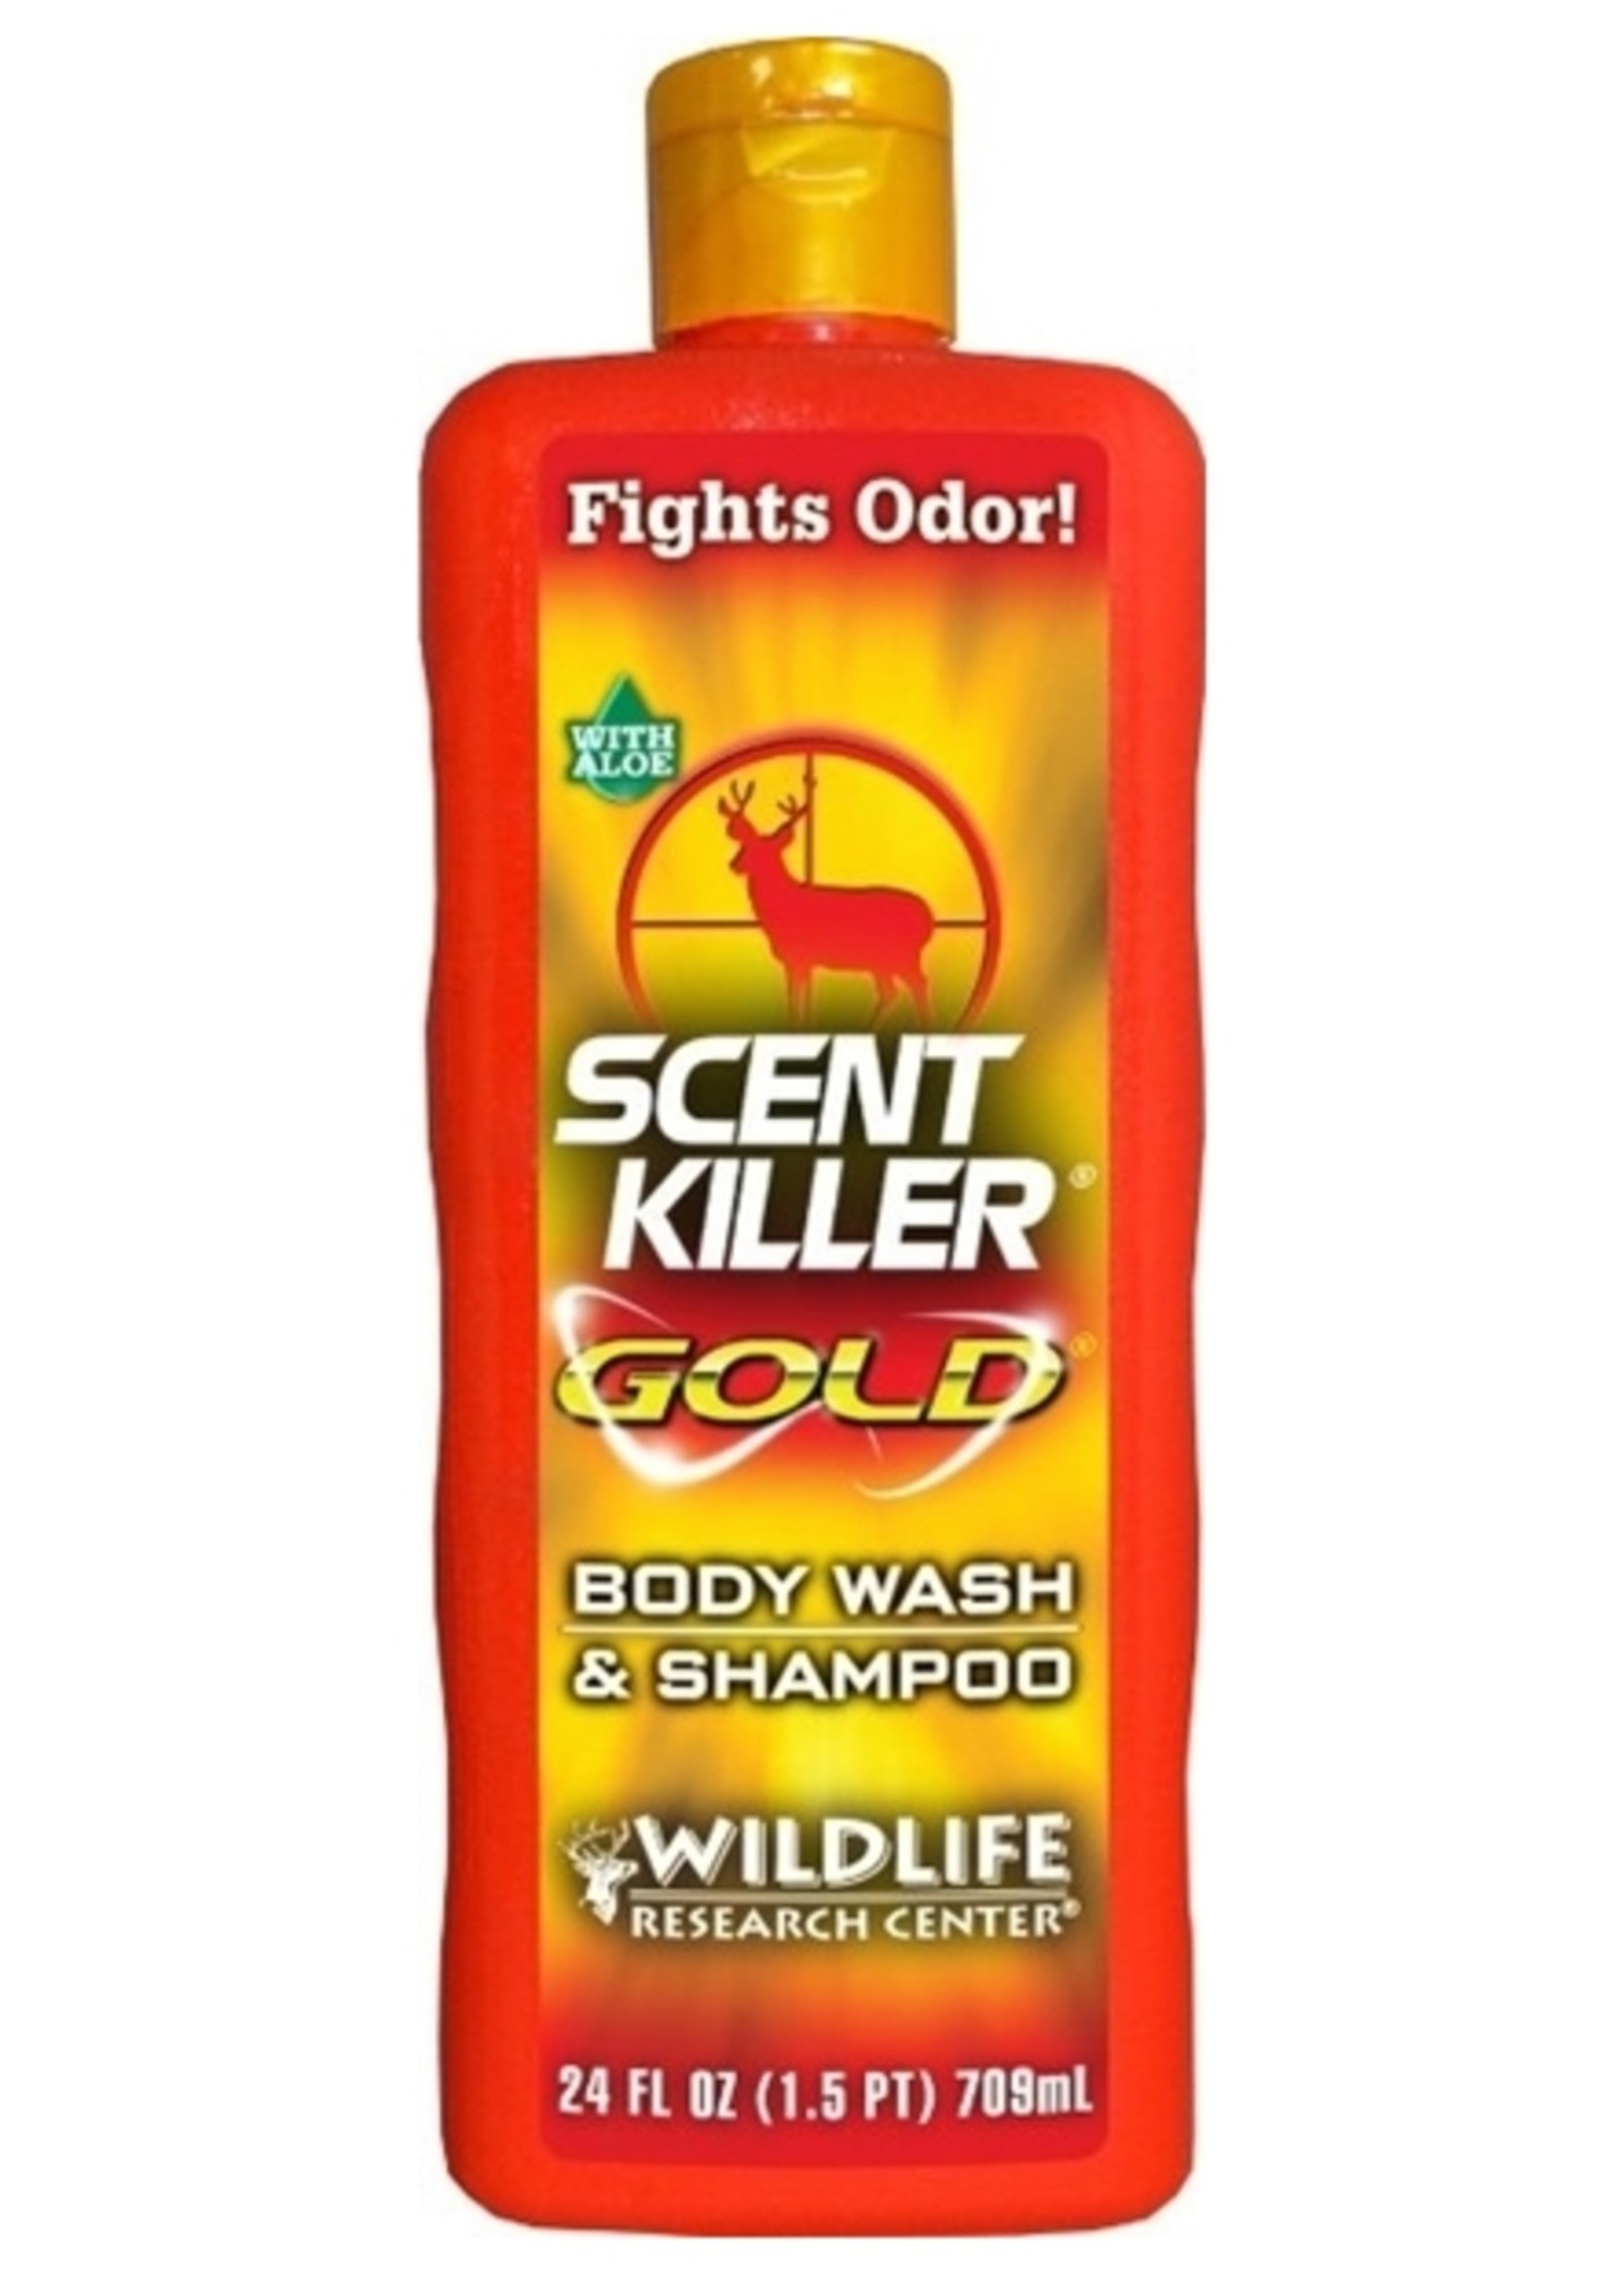 Wildlife Research Center Scent killer gold Shampooing et savon pour le corps